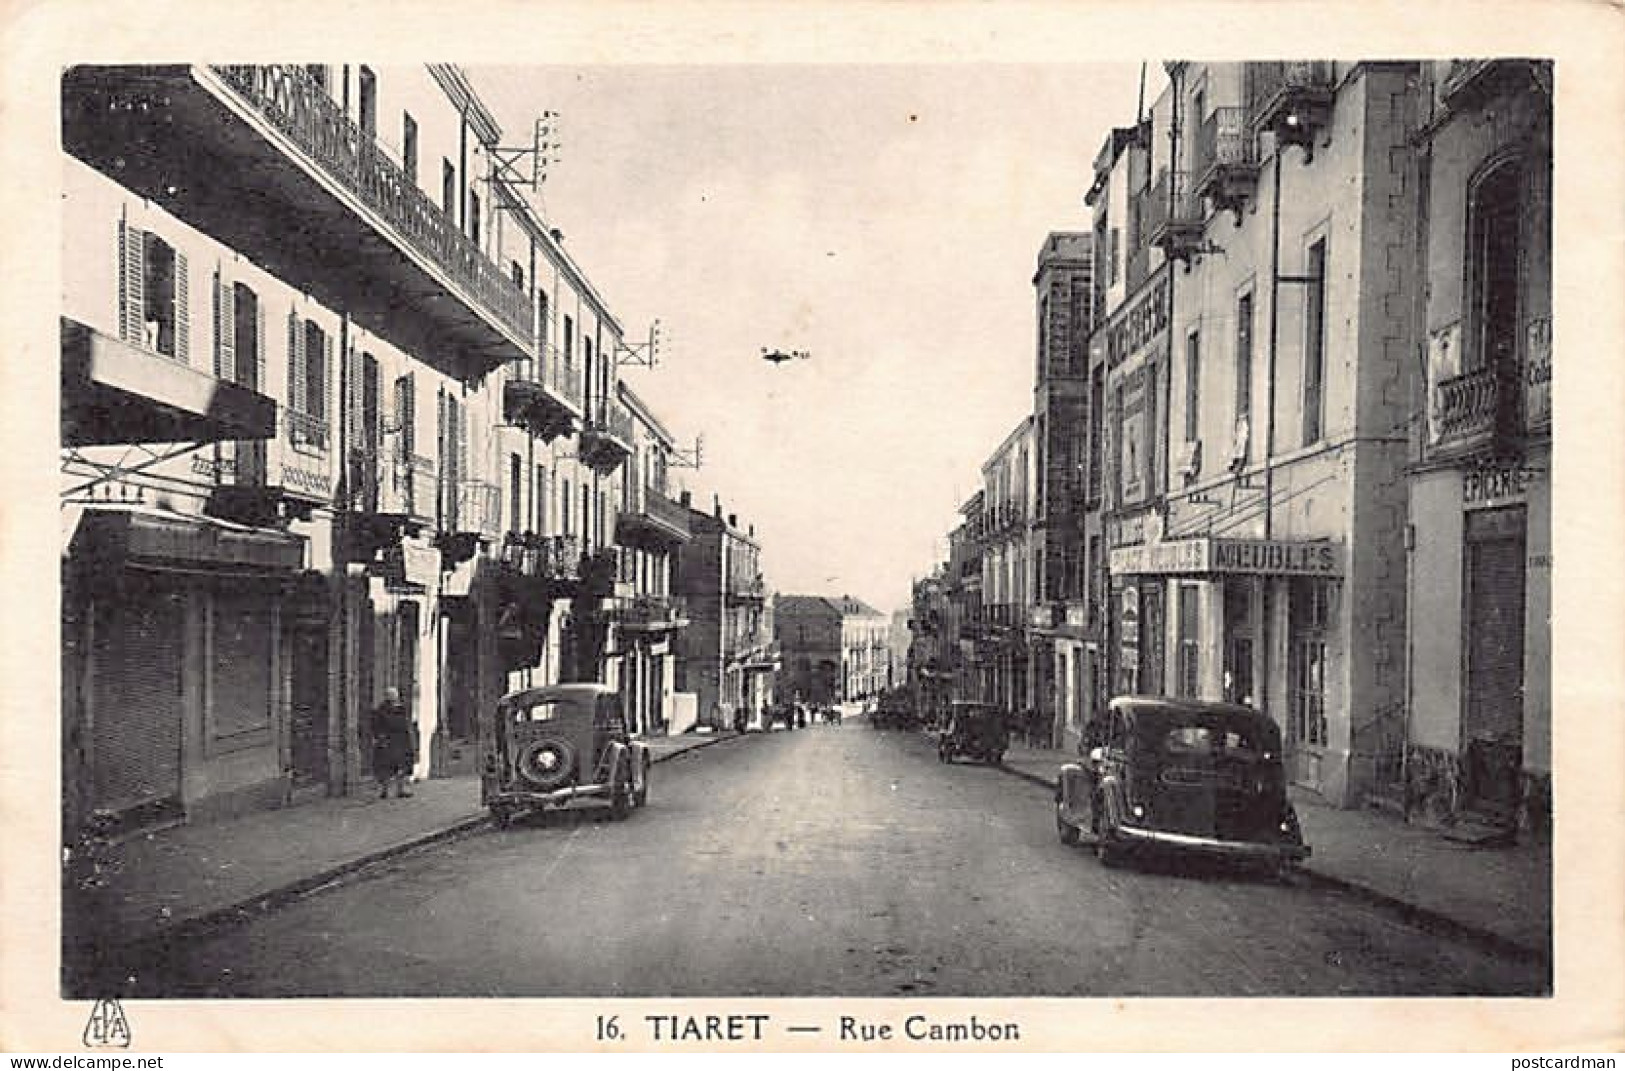 Algérie - TIARET - Rue Cambon - Palace Meubles - Epicerie - Ed. EPA 16 - Tiaret